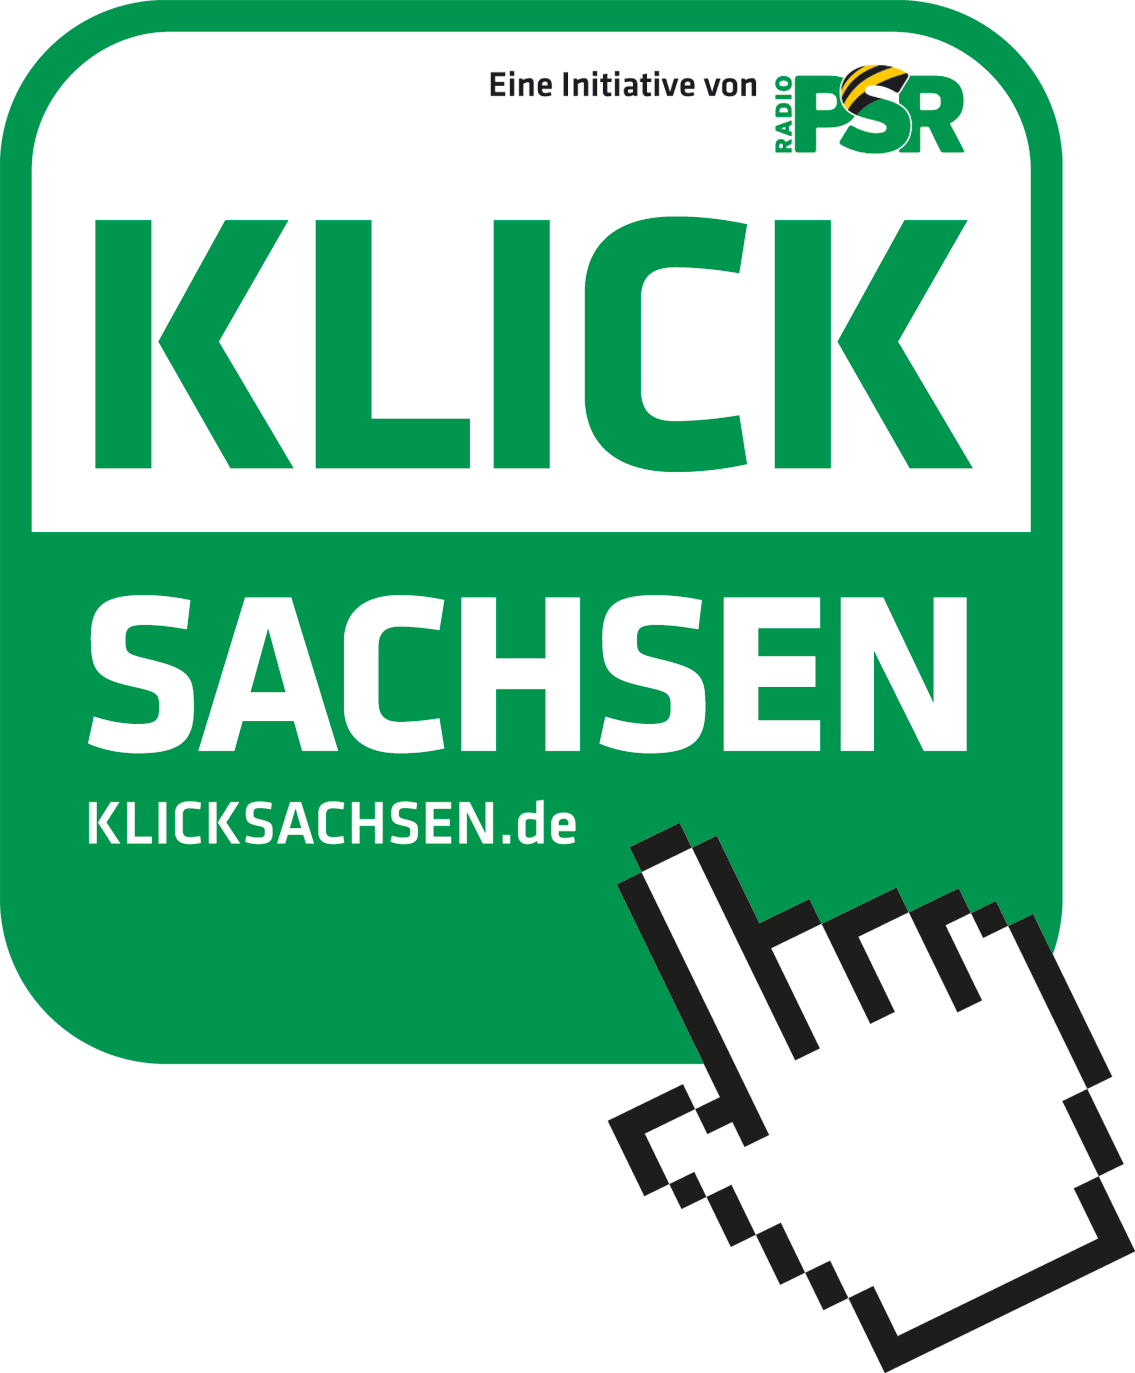 Klick Sachesen Kampagne